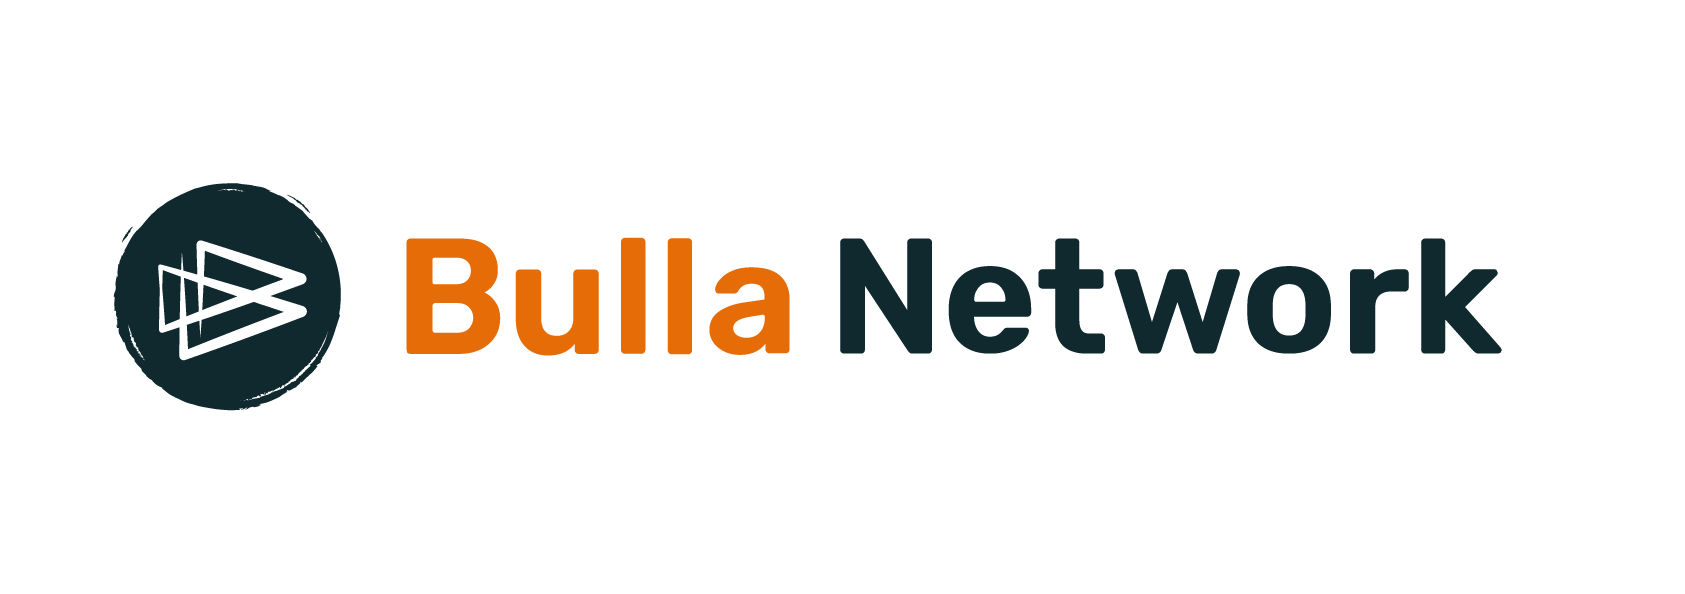 Bulla Network - BannerImage